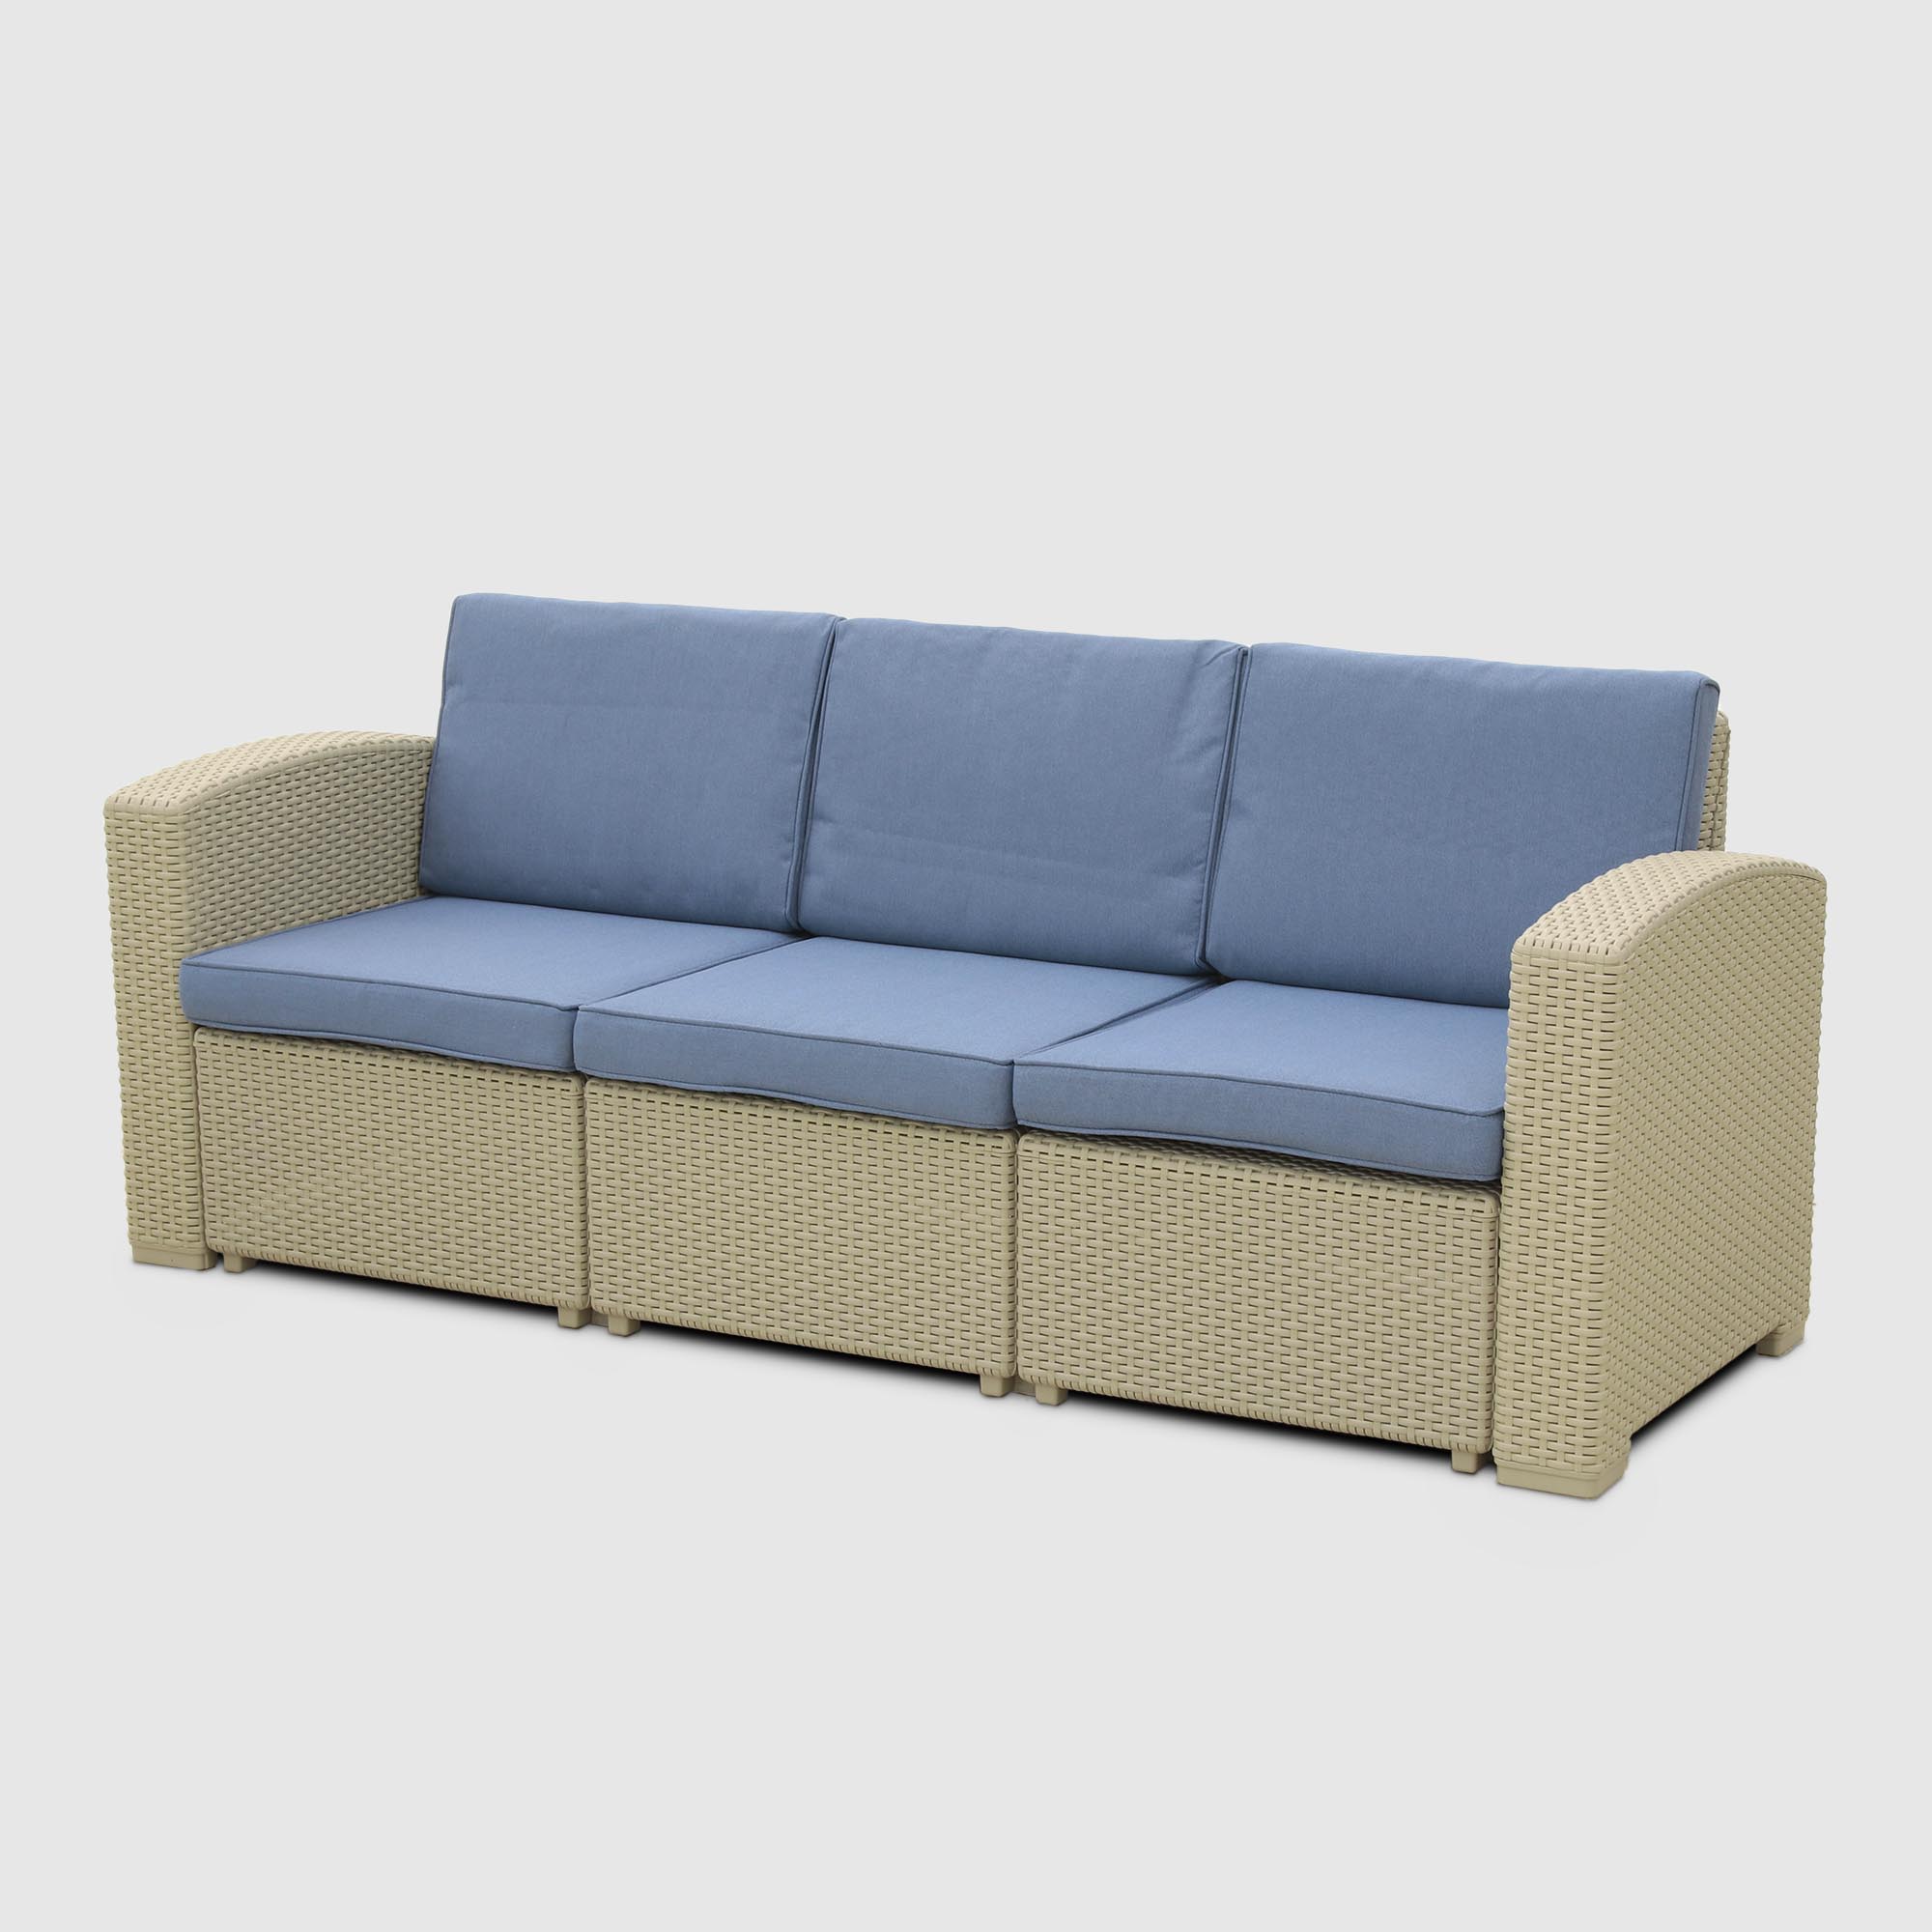 Комплект мебели LF стол+софа 3-х местная+2 кресла+тумбочка серый, цвет синий, размер 199x75x71 - фото 3